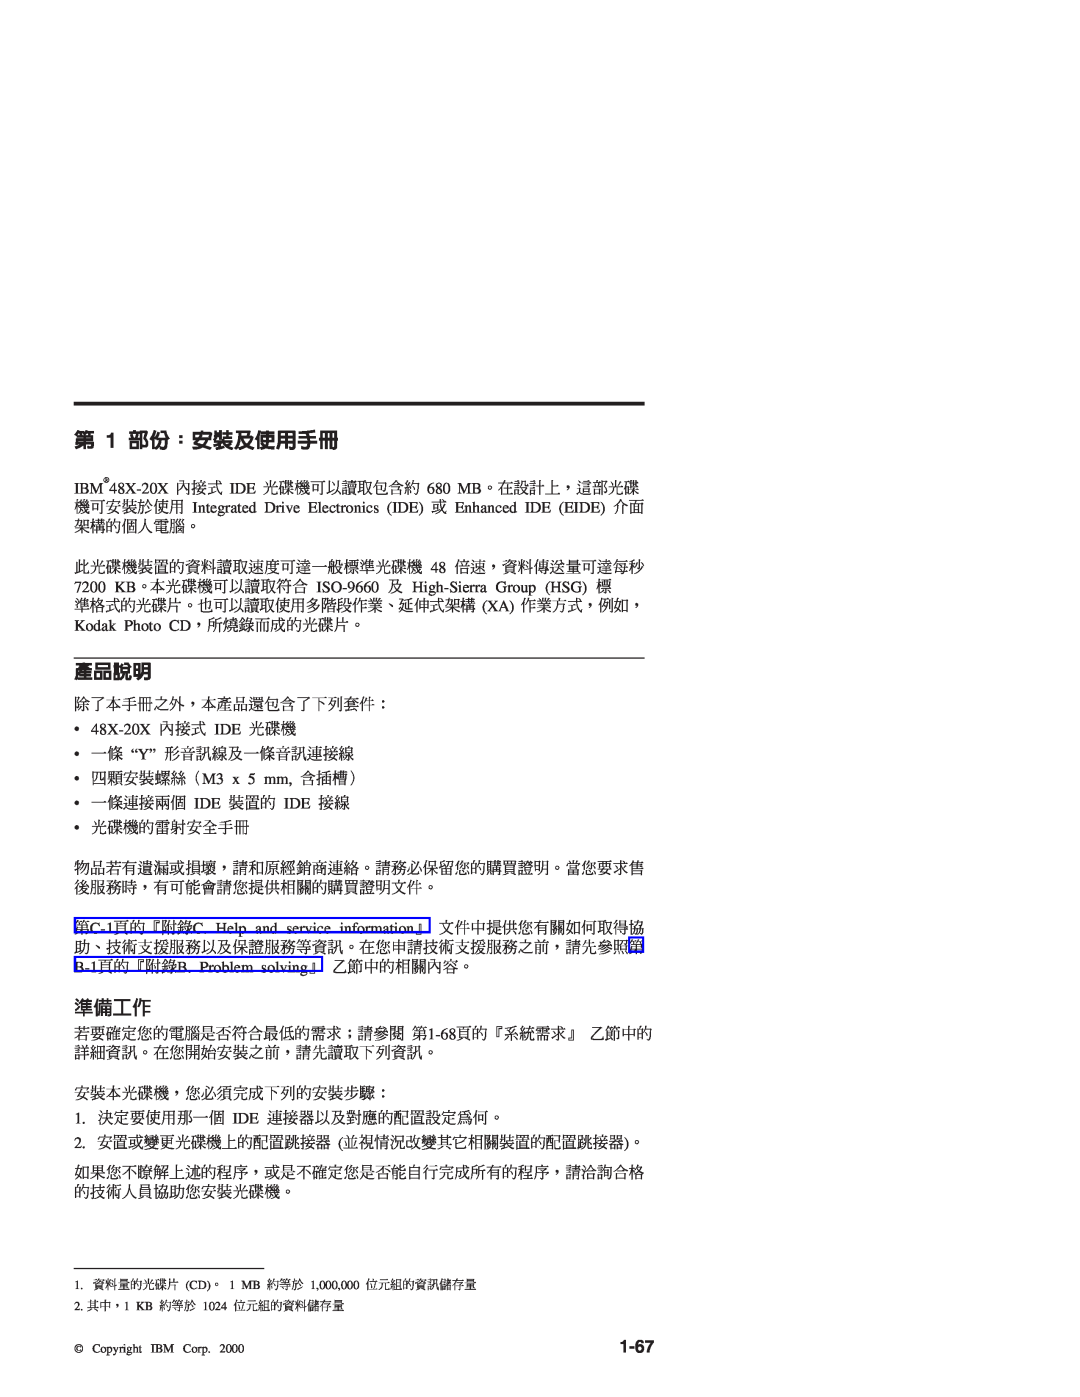 IBM 71P7279 manual 1-67, 1 í≈Gw ΓU 